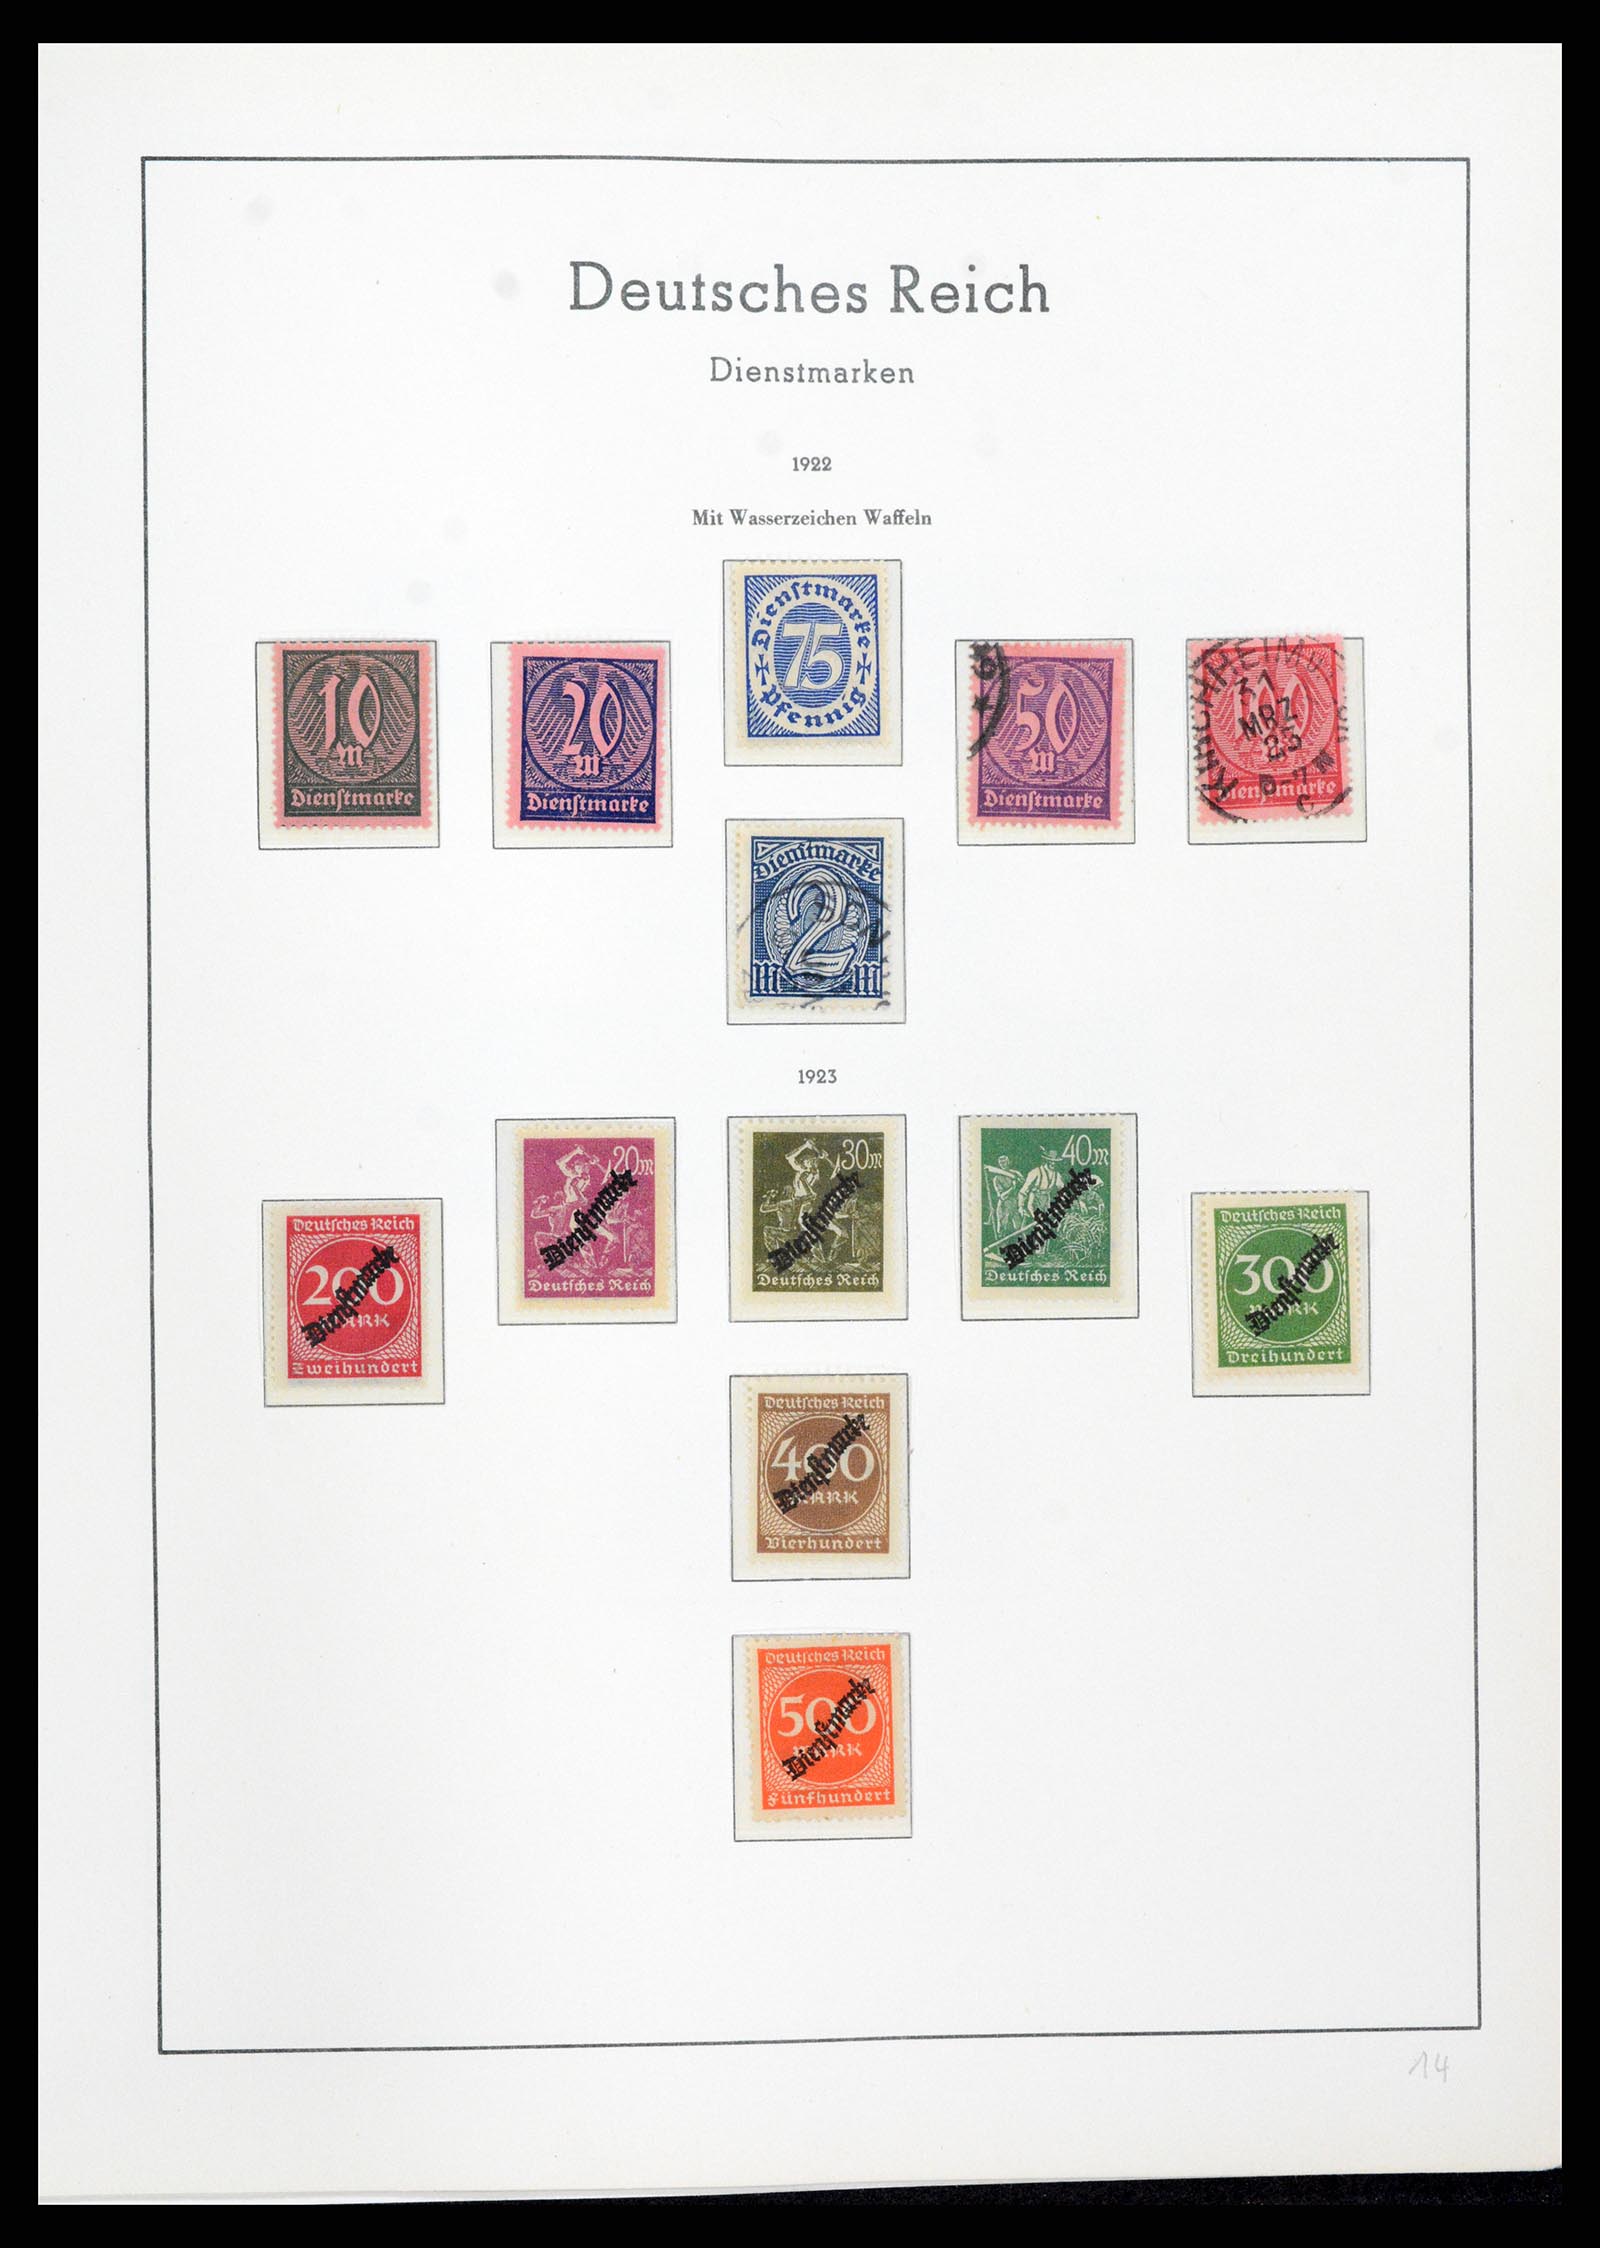 37589 048 - Stamp collection 37589 German Reich 1872-1945.